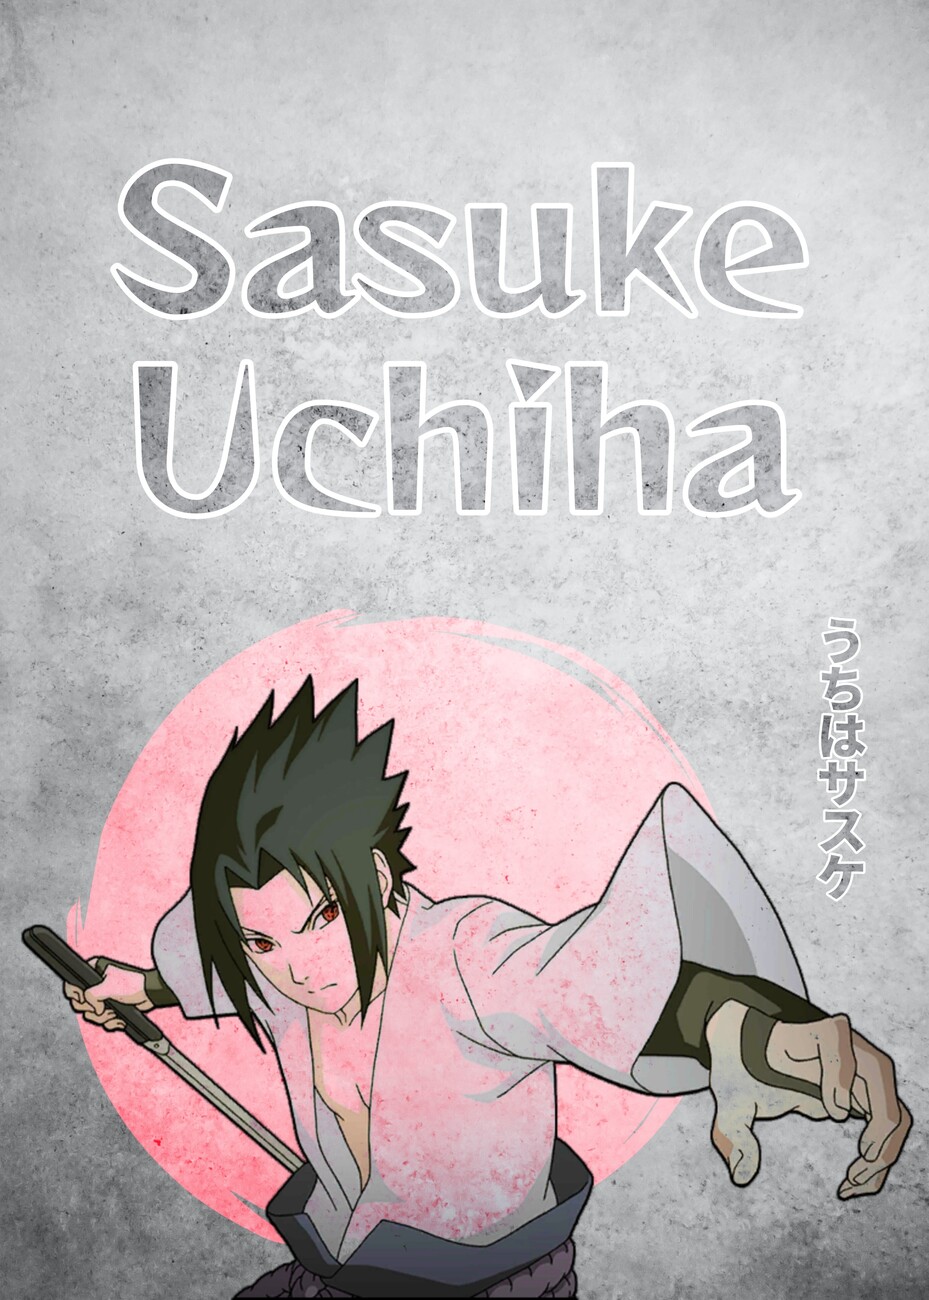 Sasuke uchiha collage wall poster Paper Print - Animation